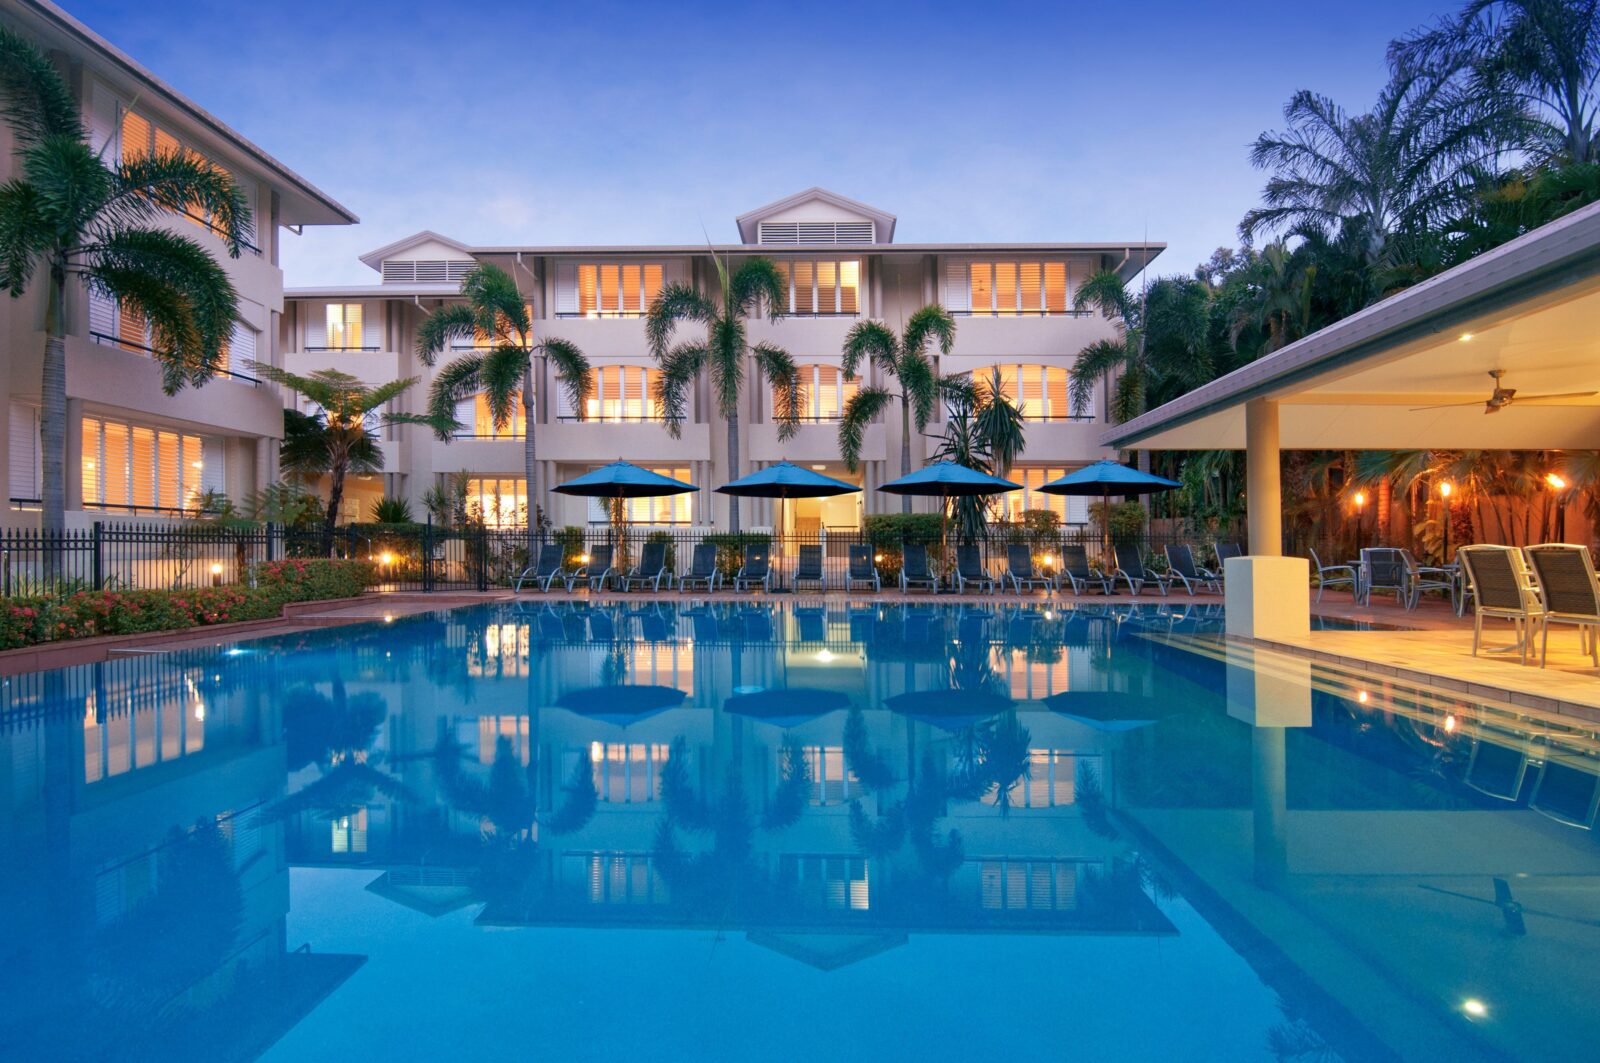 Cayman Villas Port Douglas Accommodation Family